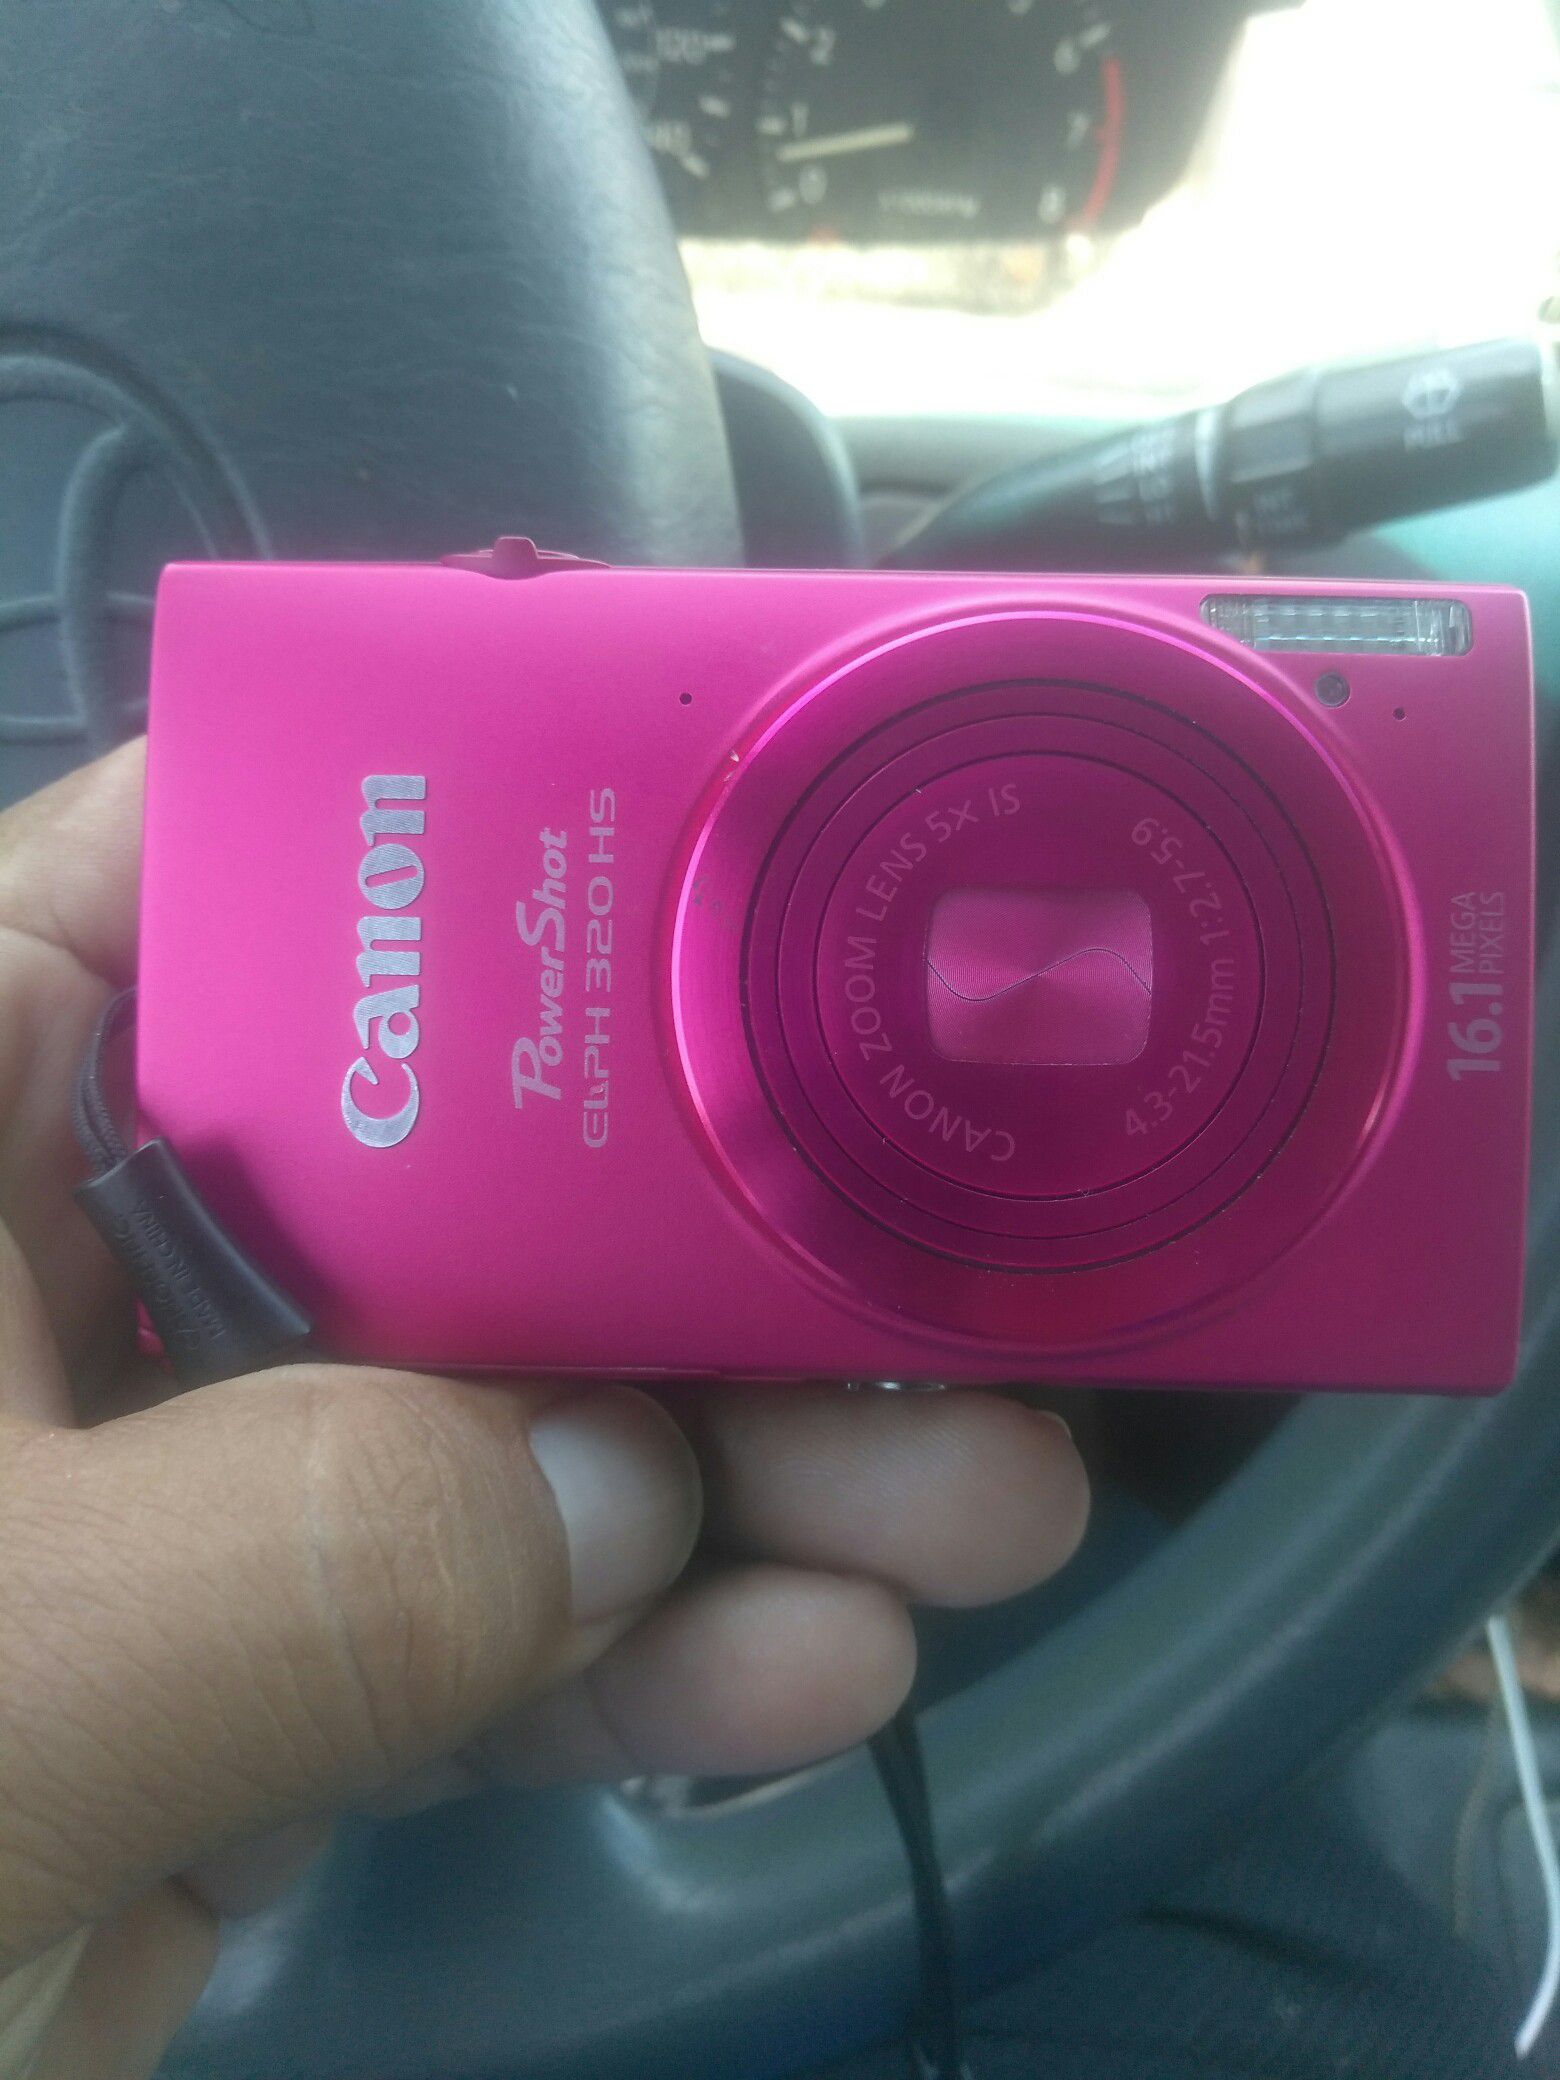 Canon PowerShot digital camera